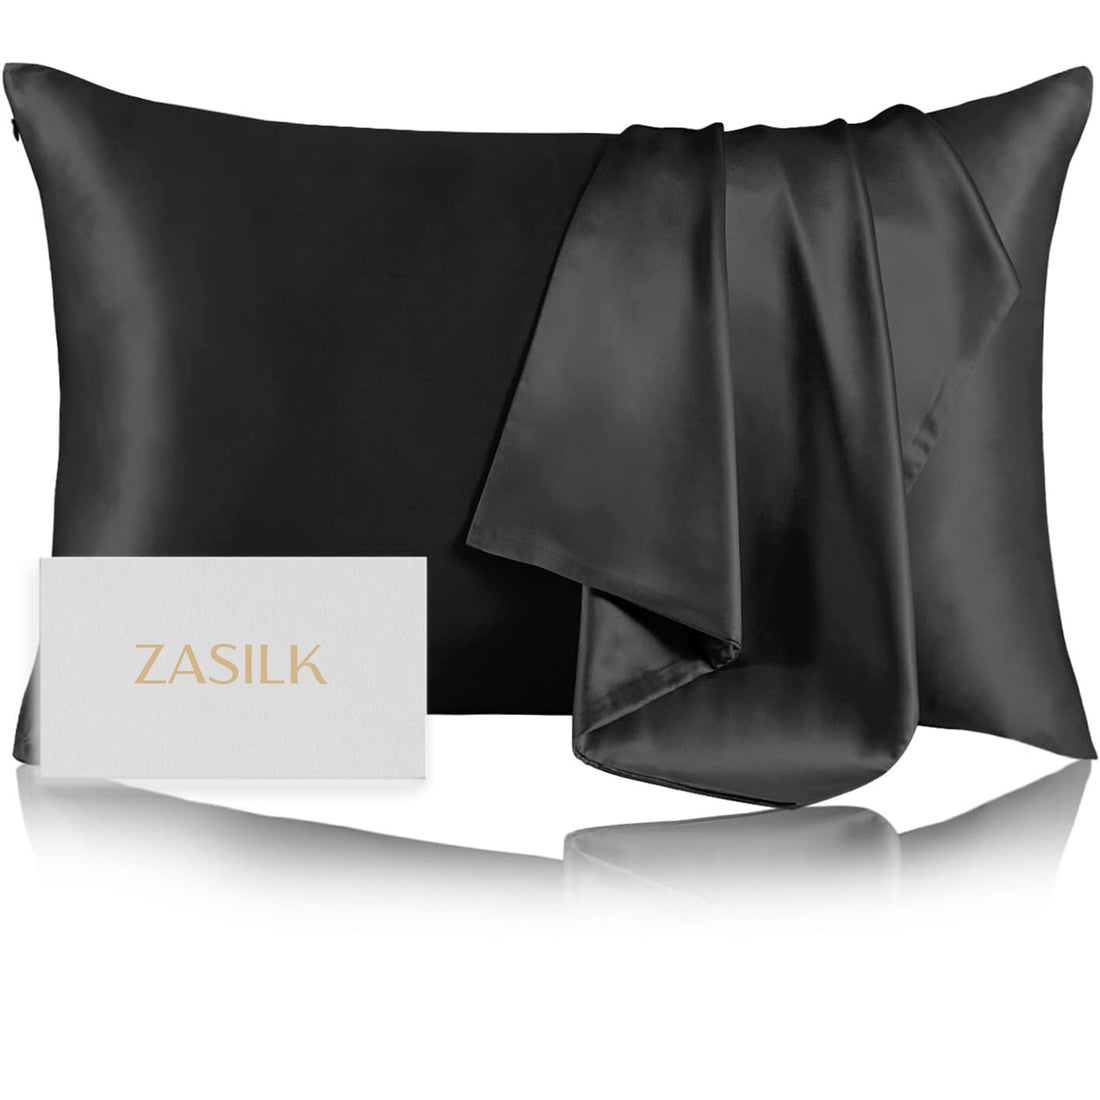 Elegant black ZASILK pure mulberry silk pillowcase in 22-Momme 6A grade silk for a restful sleep experience.